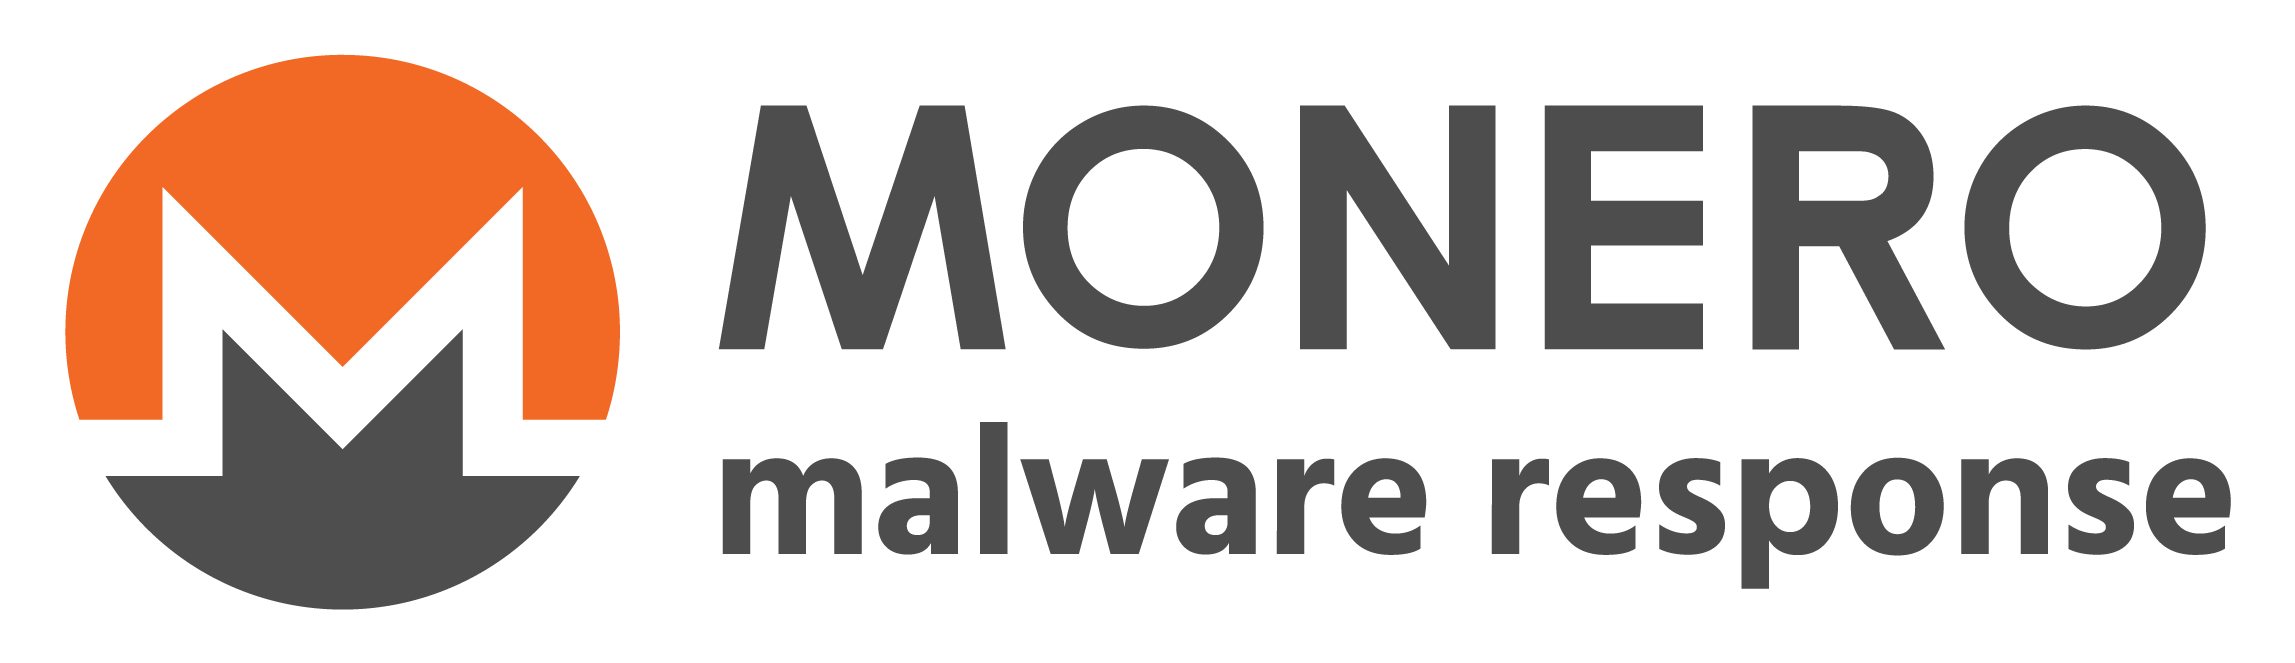 Monero Malware Response Workgroup Logo